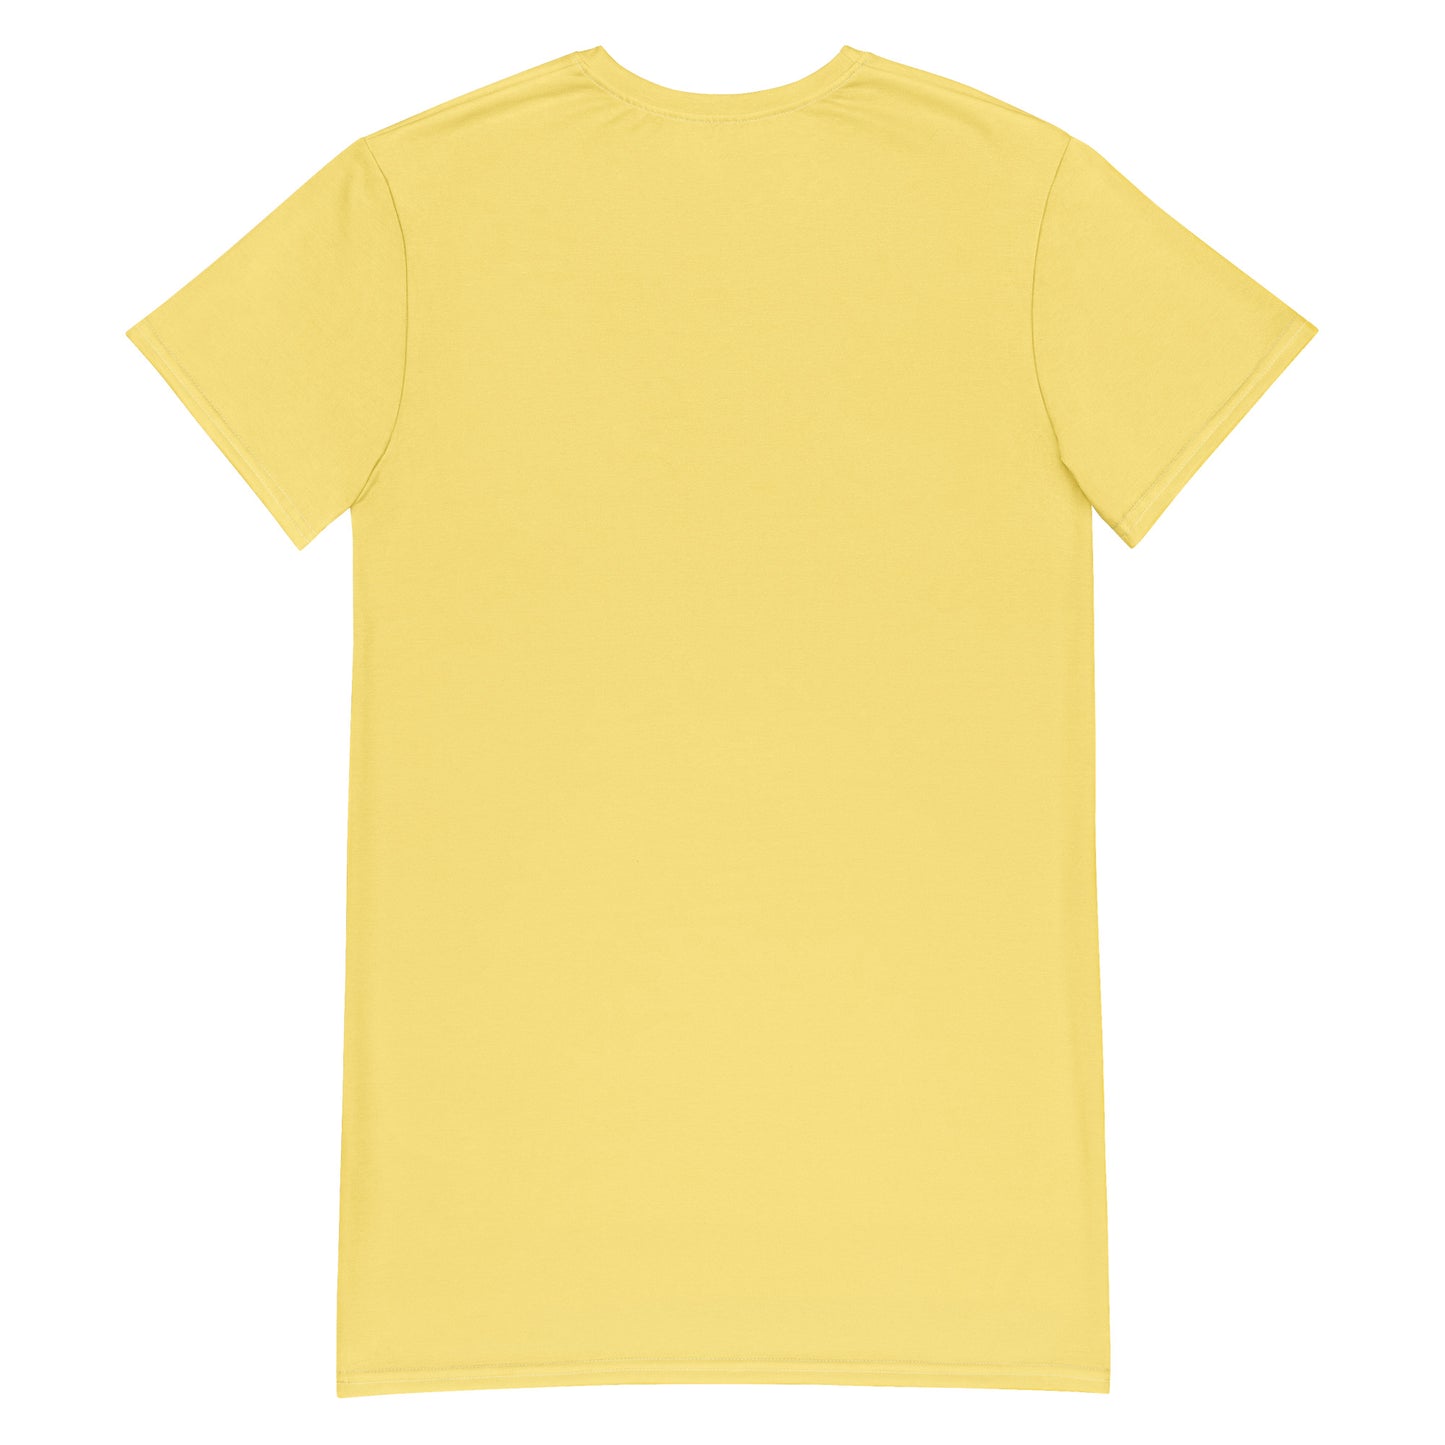 T-shirt Dress: I Love Me Sooo Much (yellow)